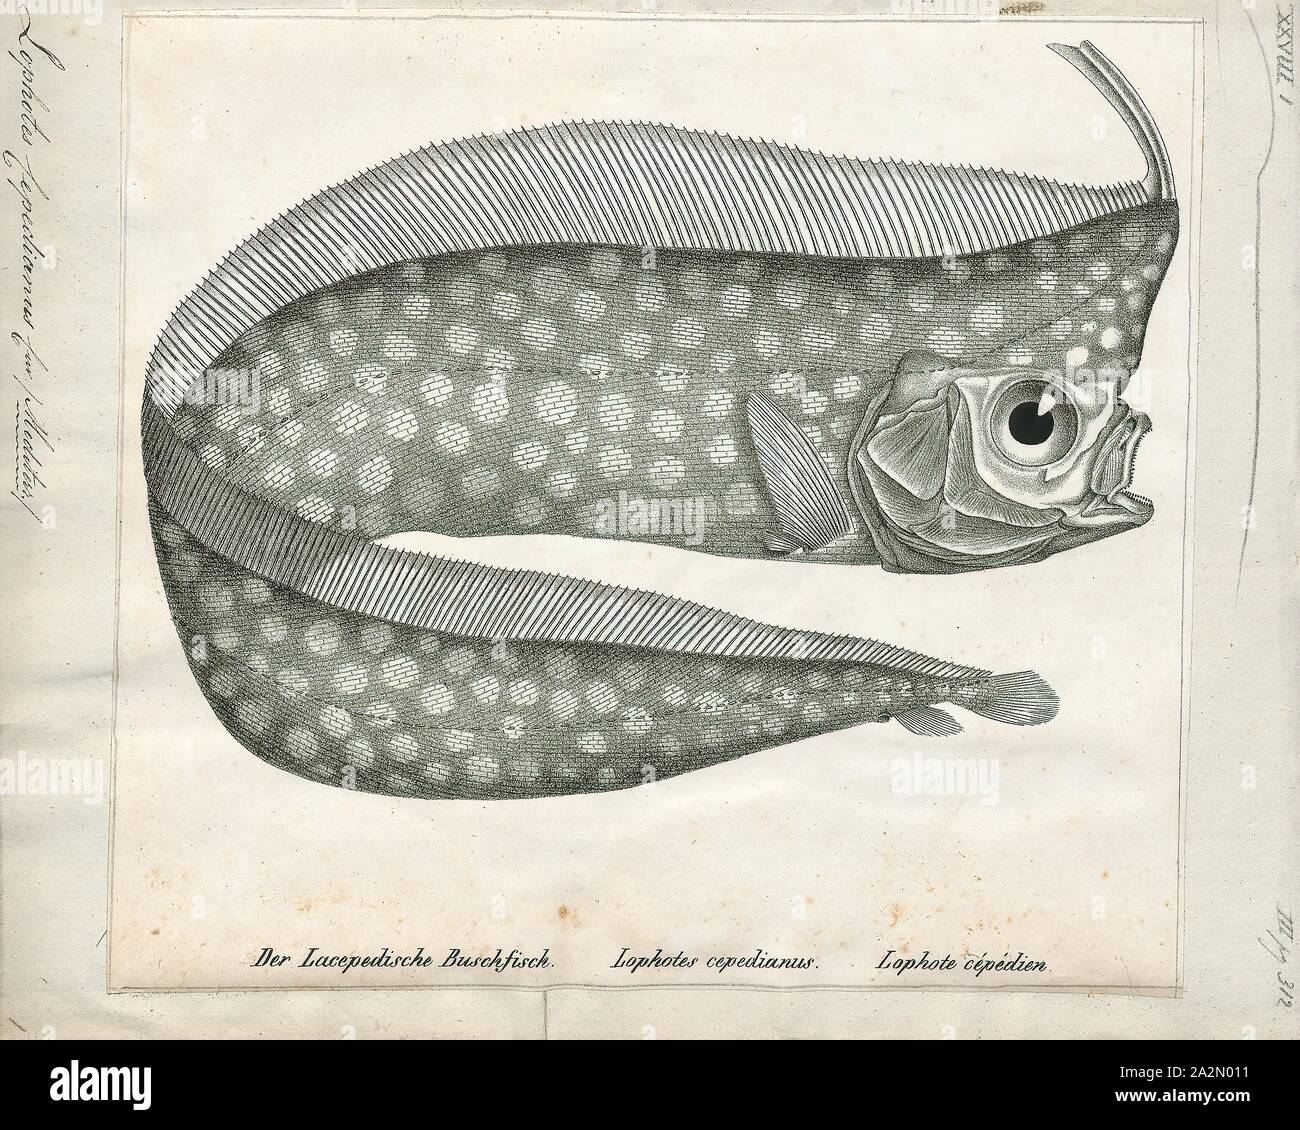 Lophotus cepedianus, Print, Lophotus is a genus of crestfishes, 1700-1880 Stock Photo